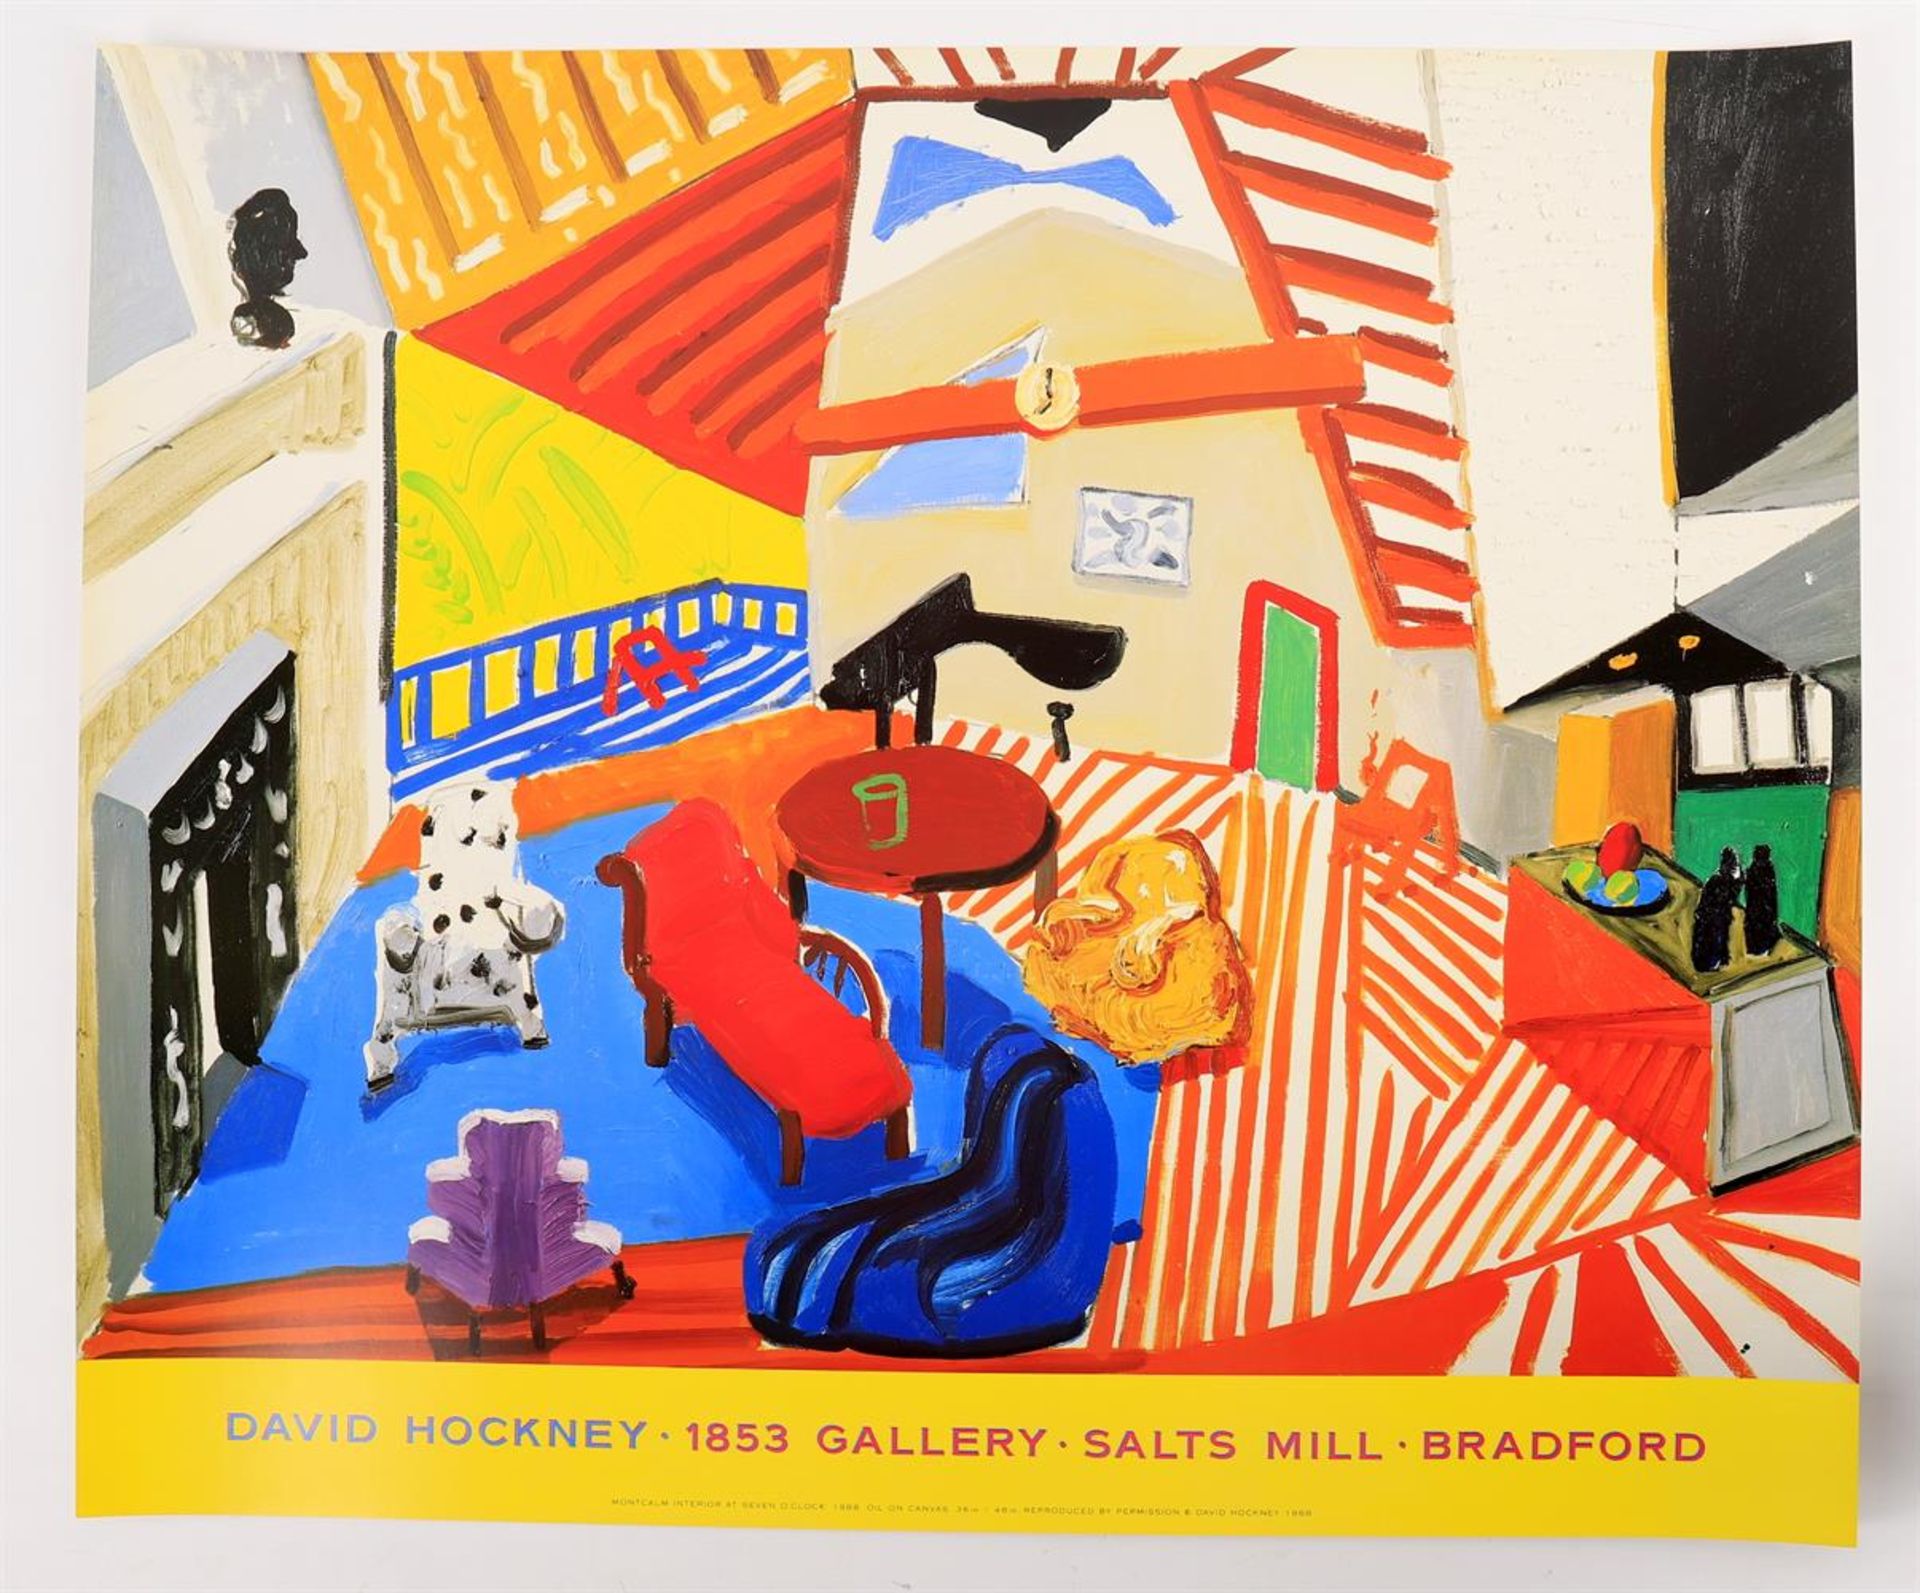 After David Hockney, Montcalm Interior at Seven O'Clock, Exhibition Poster - Image 2 of 2